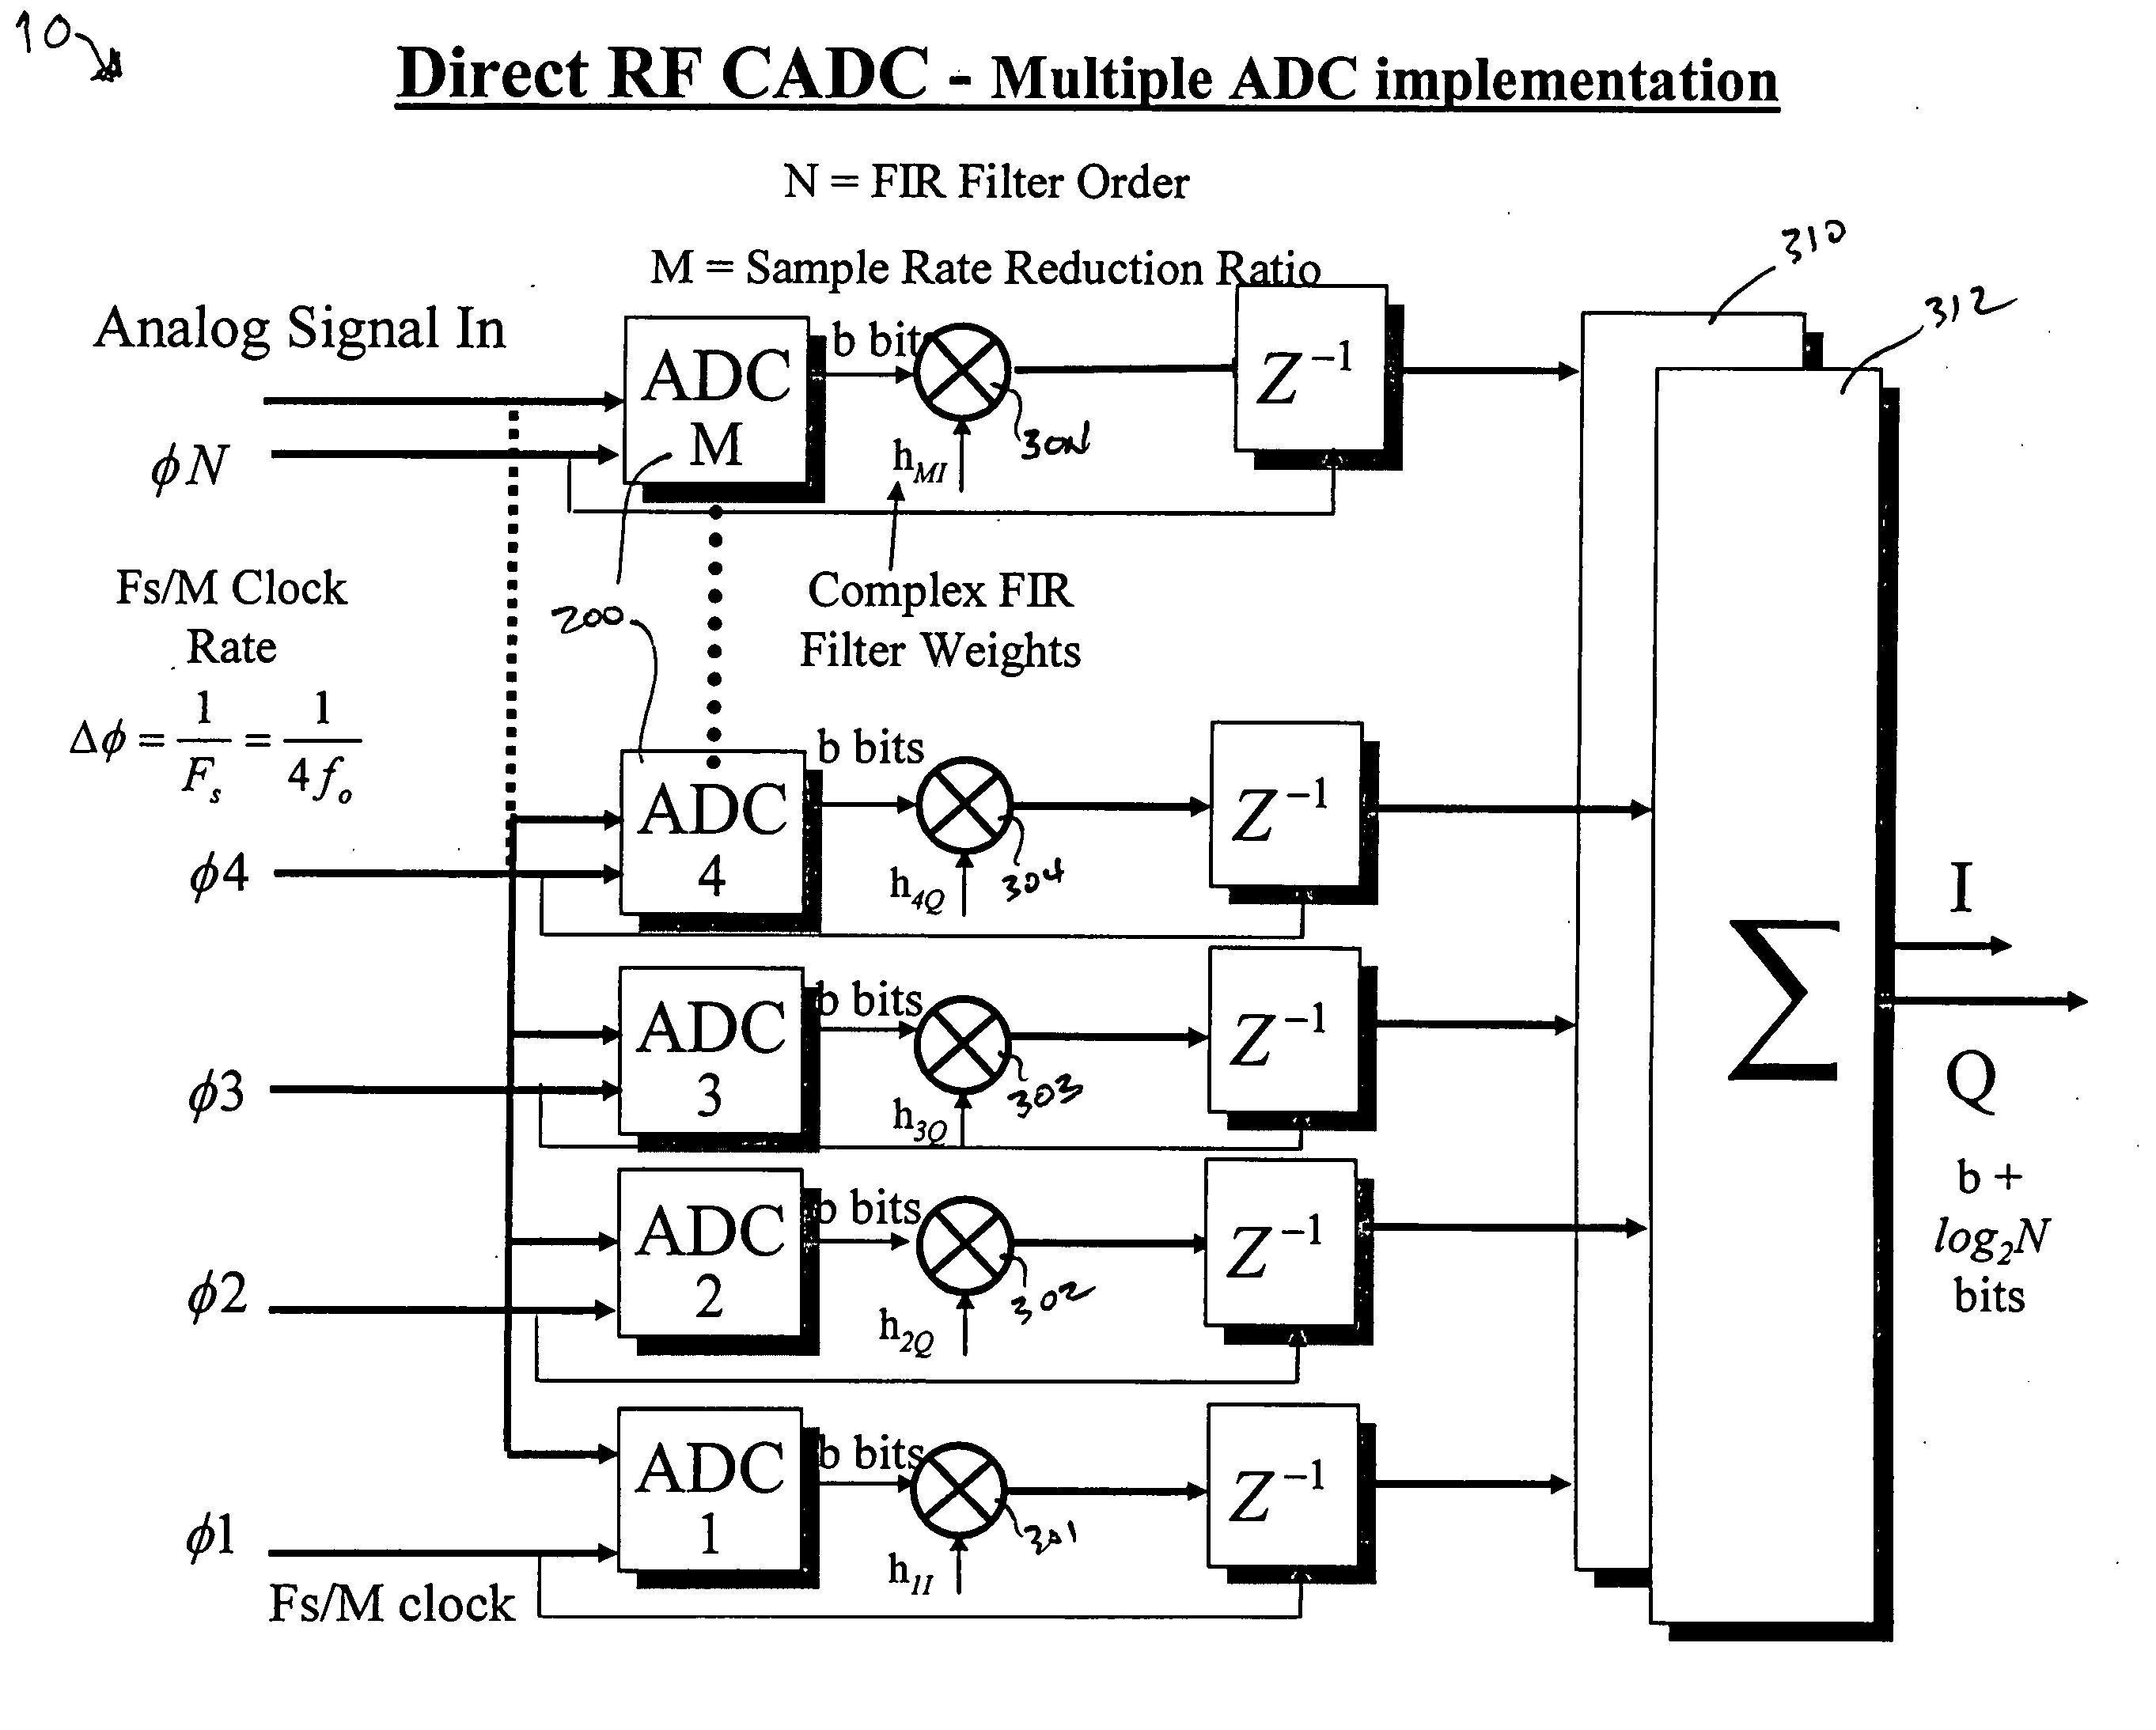 Direct RF complex analog to digital converter